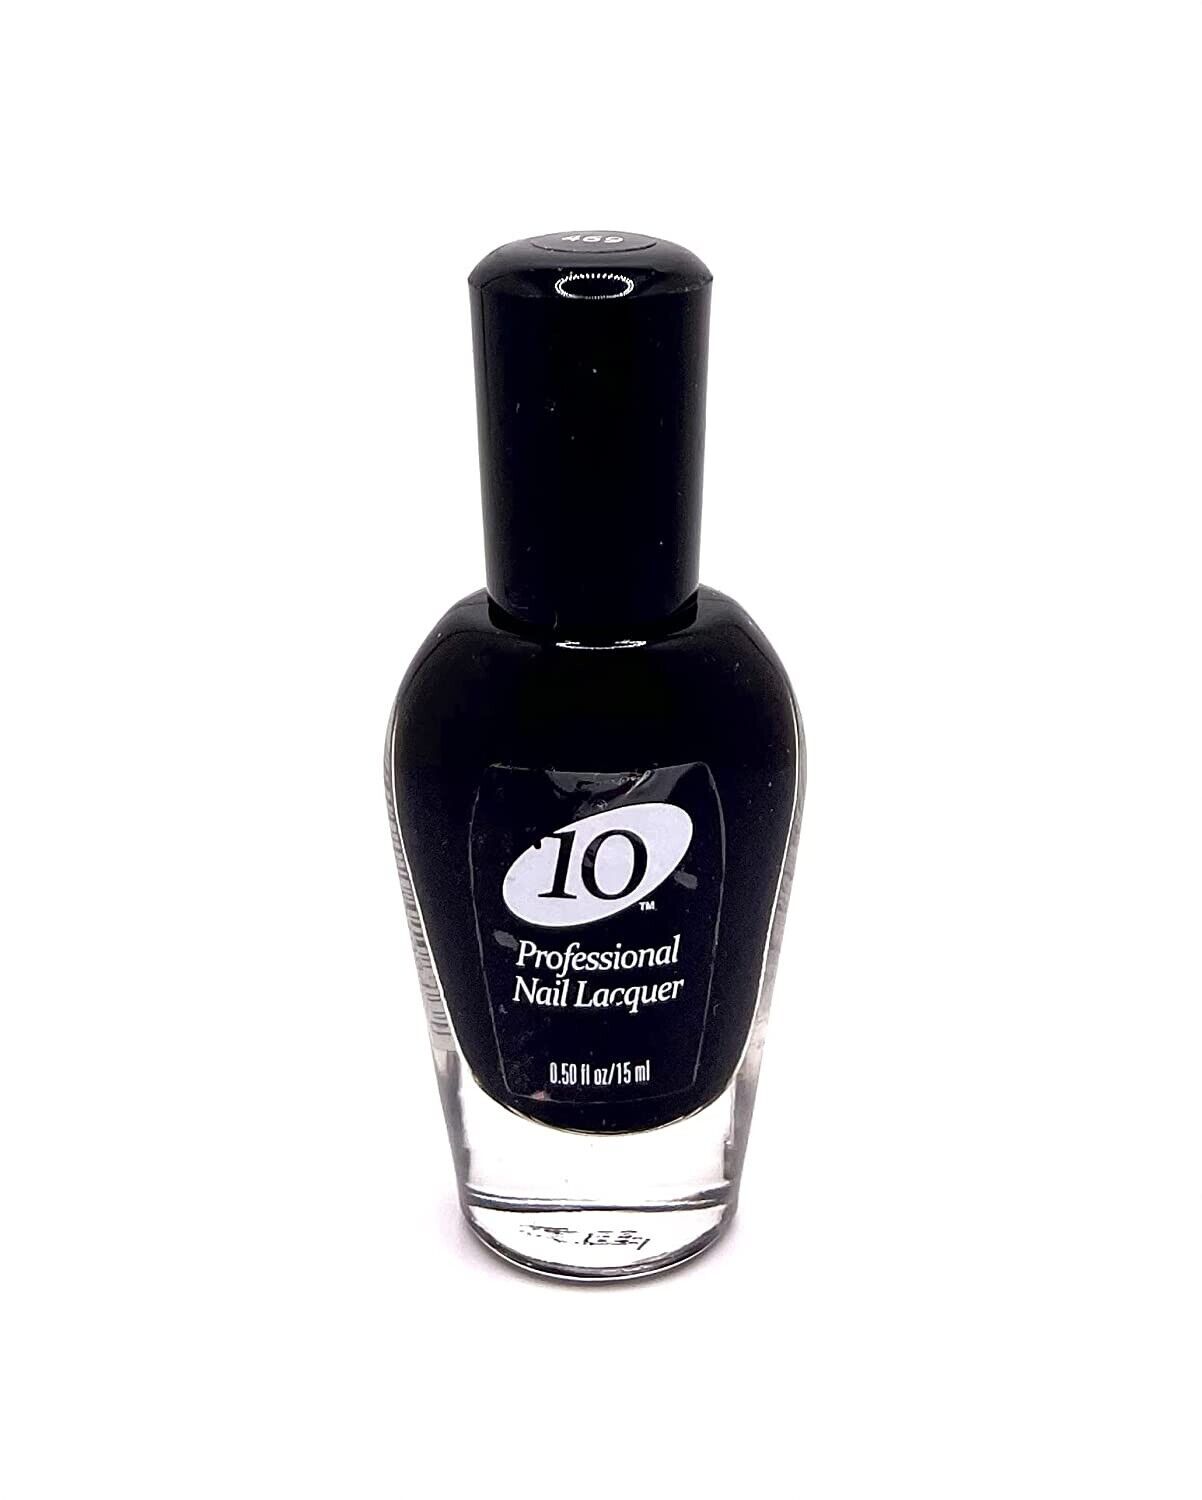 10 Professional Nail Lacquer Finger Nail Polish (The Little Black Dress  469) 815225010846 | eBay